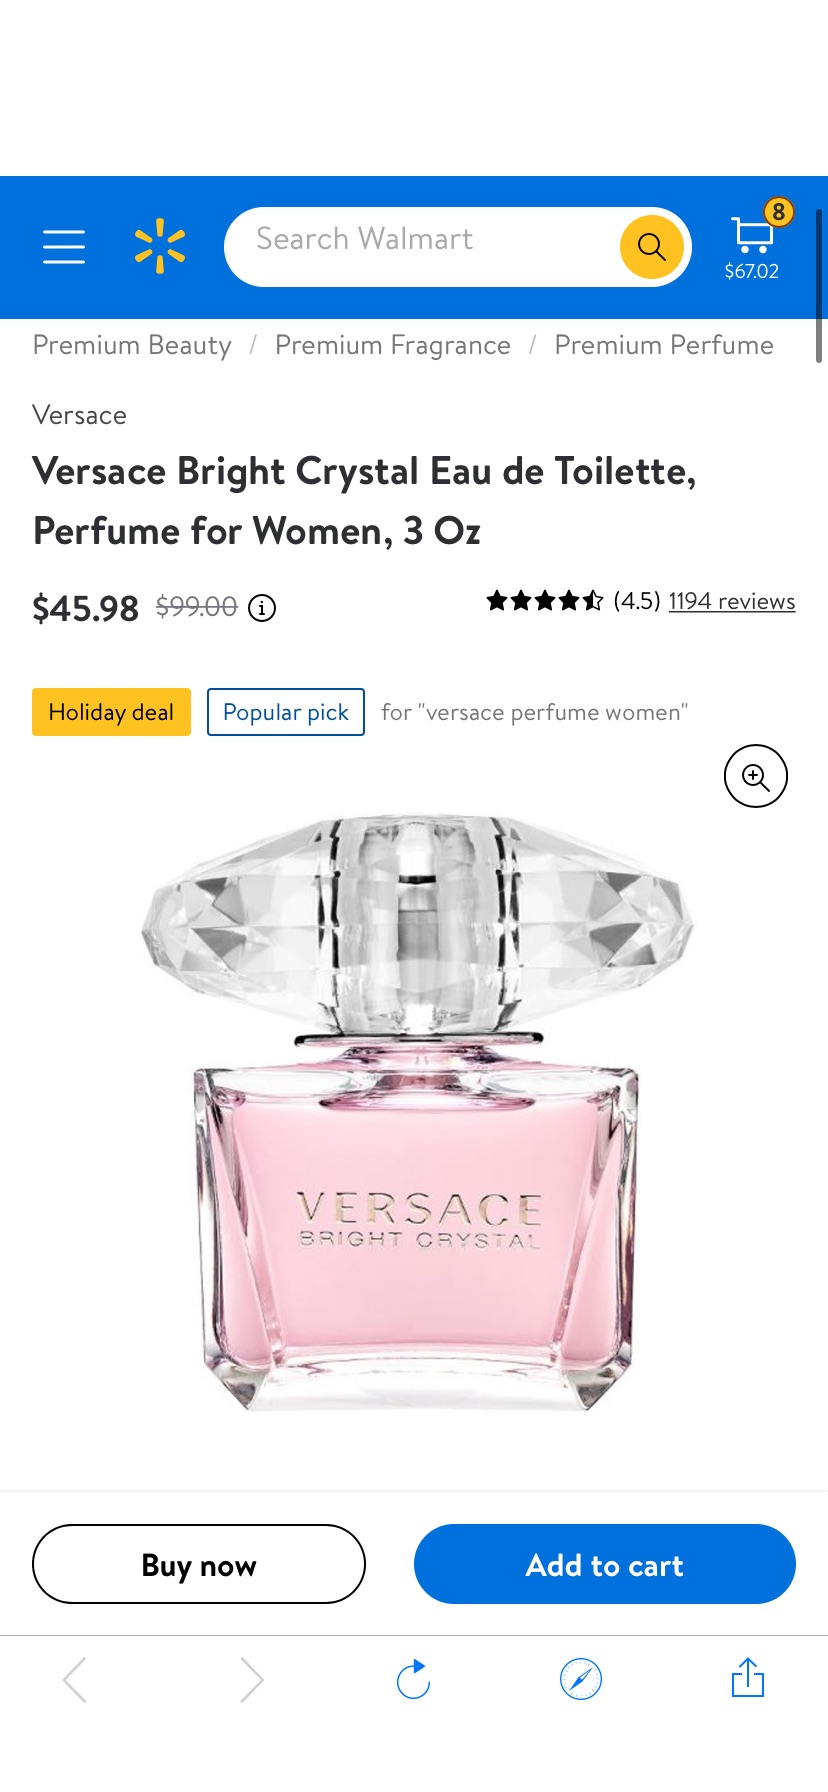 Versace Bright Crystal Eau de Toilette, Perfume for Women, 3 Oz - Walmart.com香水